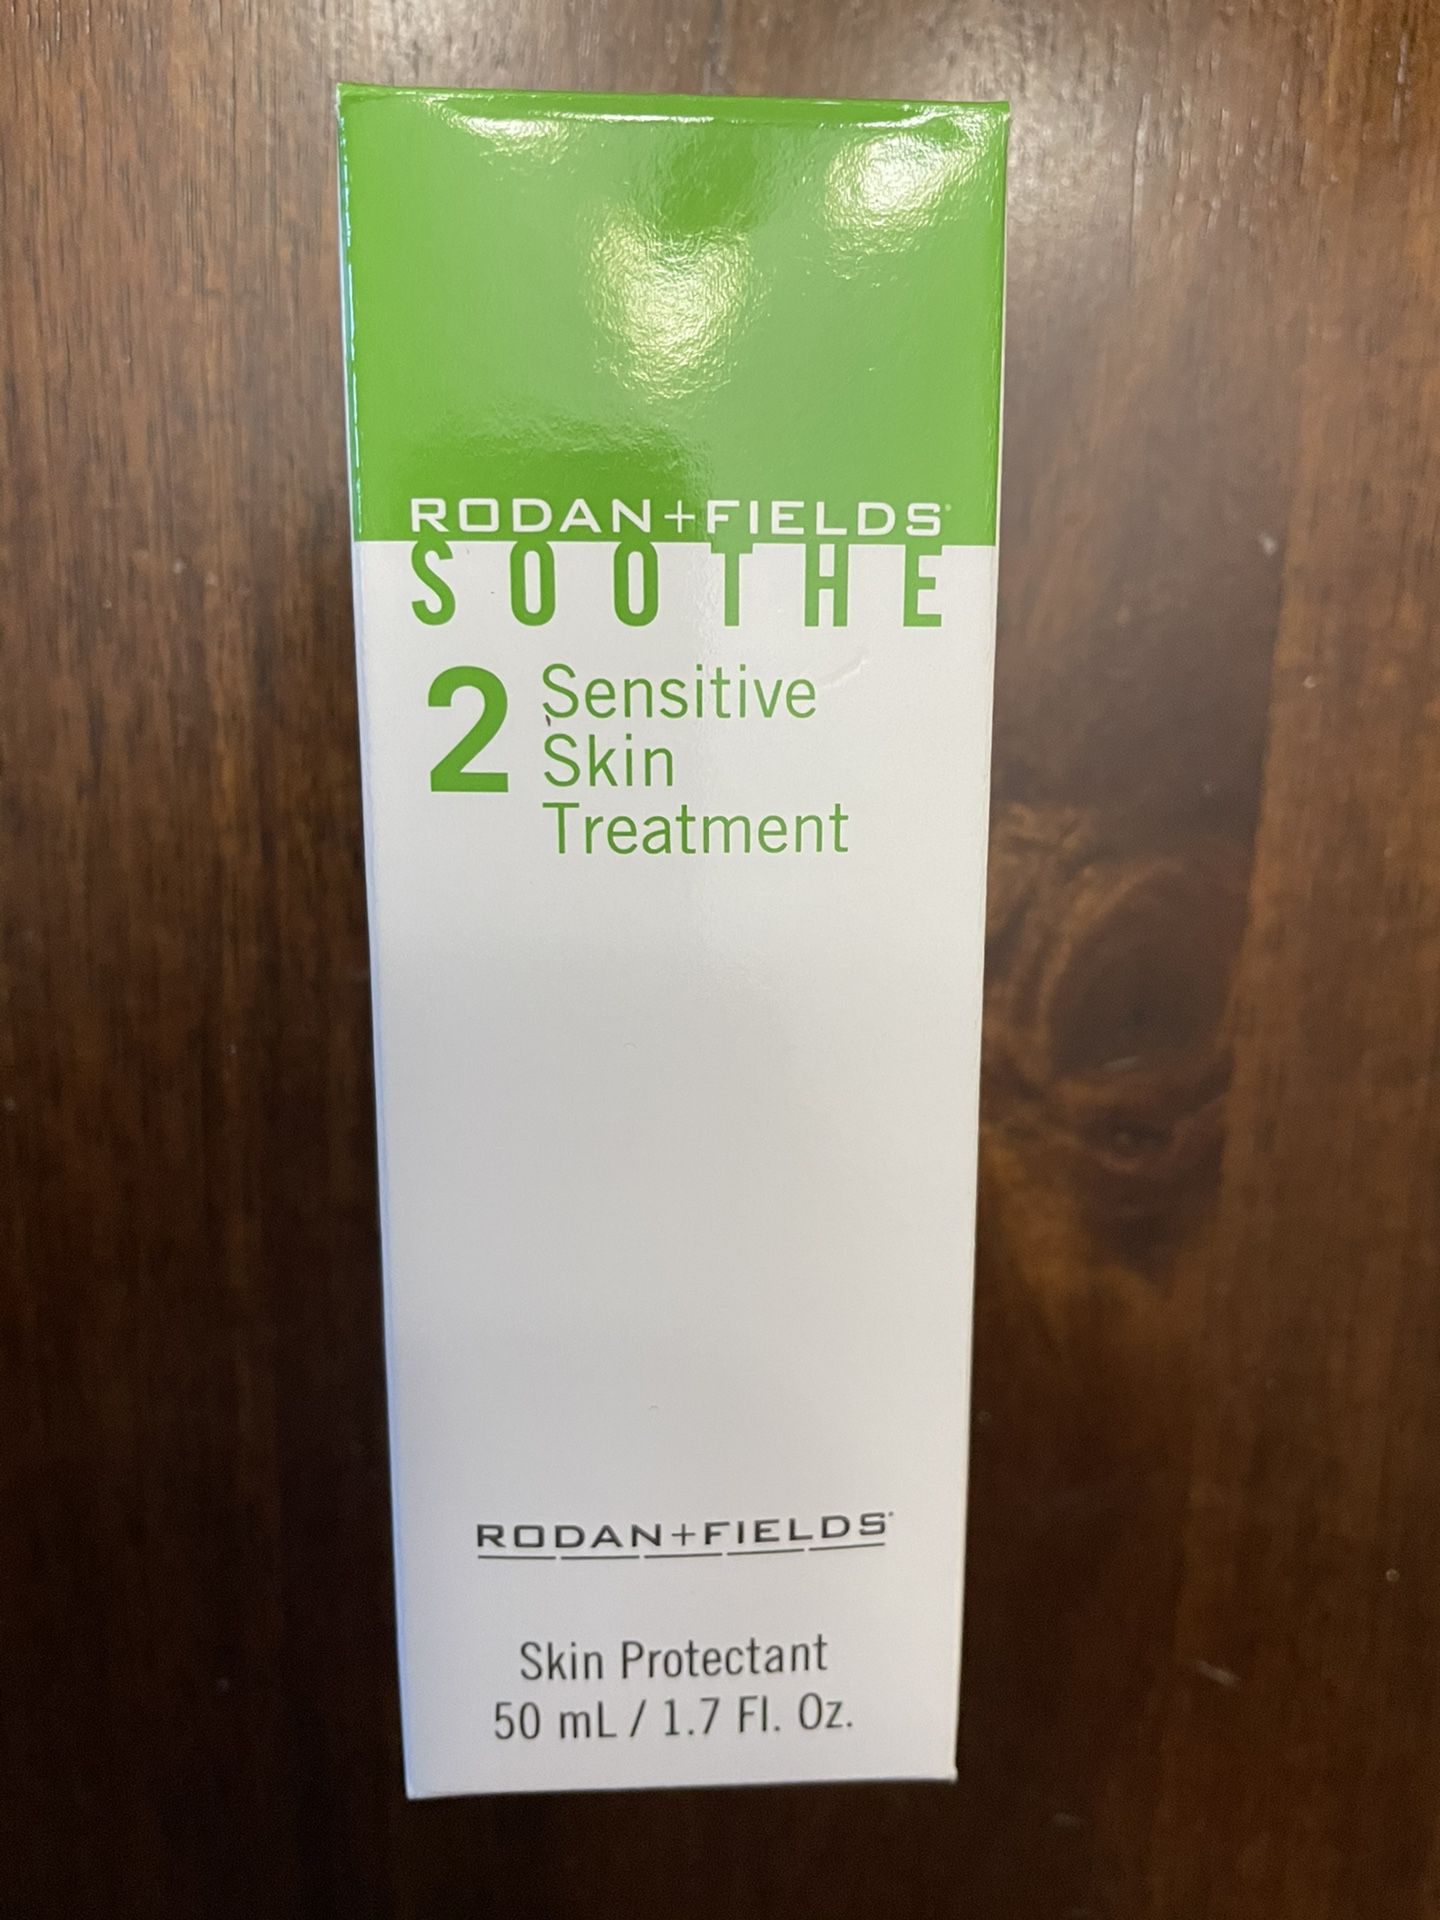 Rodan + Fields Soothe Sensitive Skin Treatment Skin Protectant... Step 2